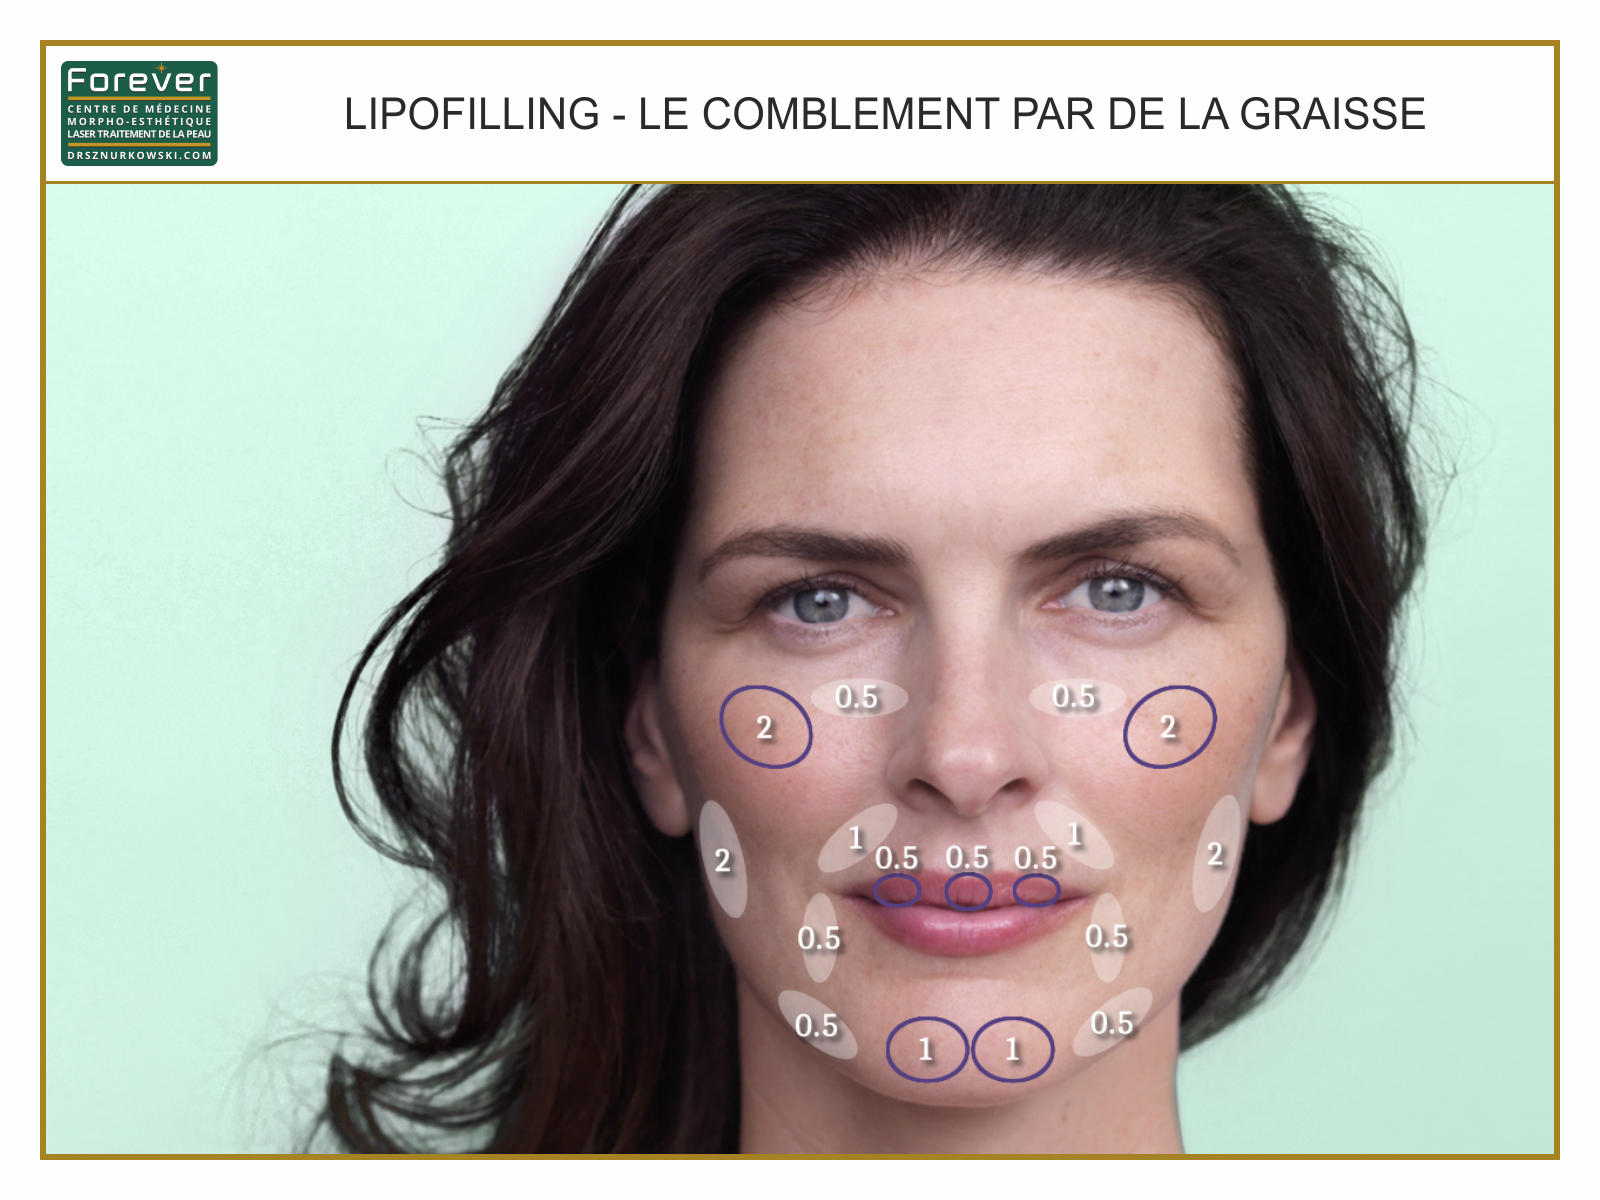 Lipofilling - Facial Filling With Fat (80x60) FR.jpg